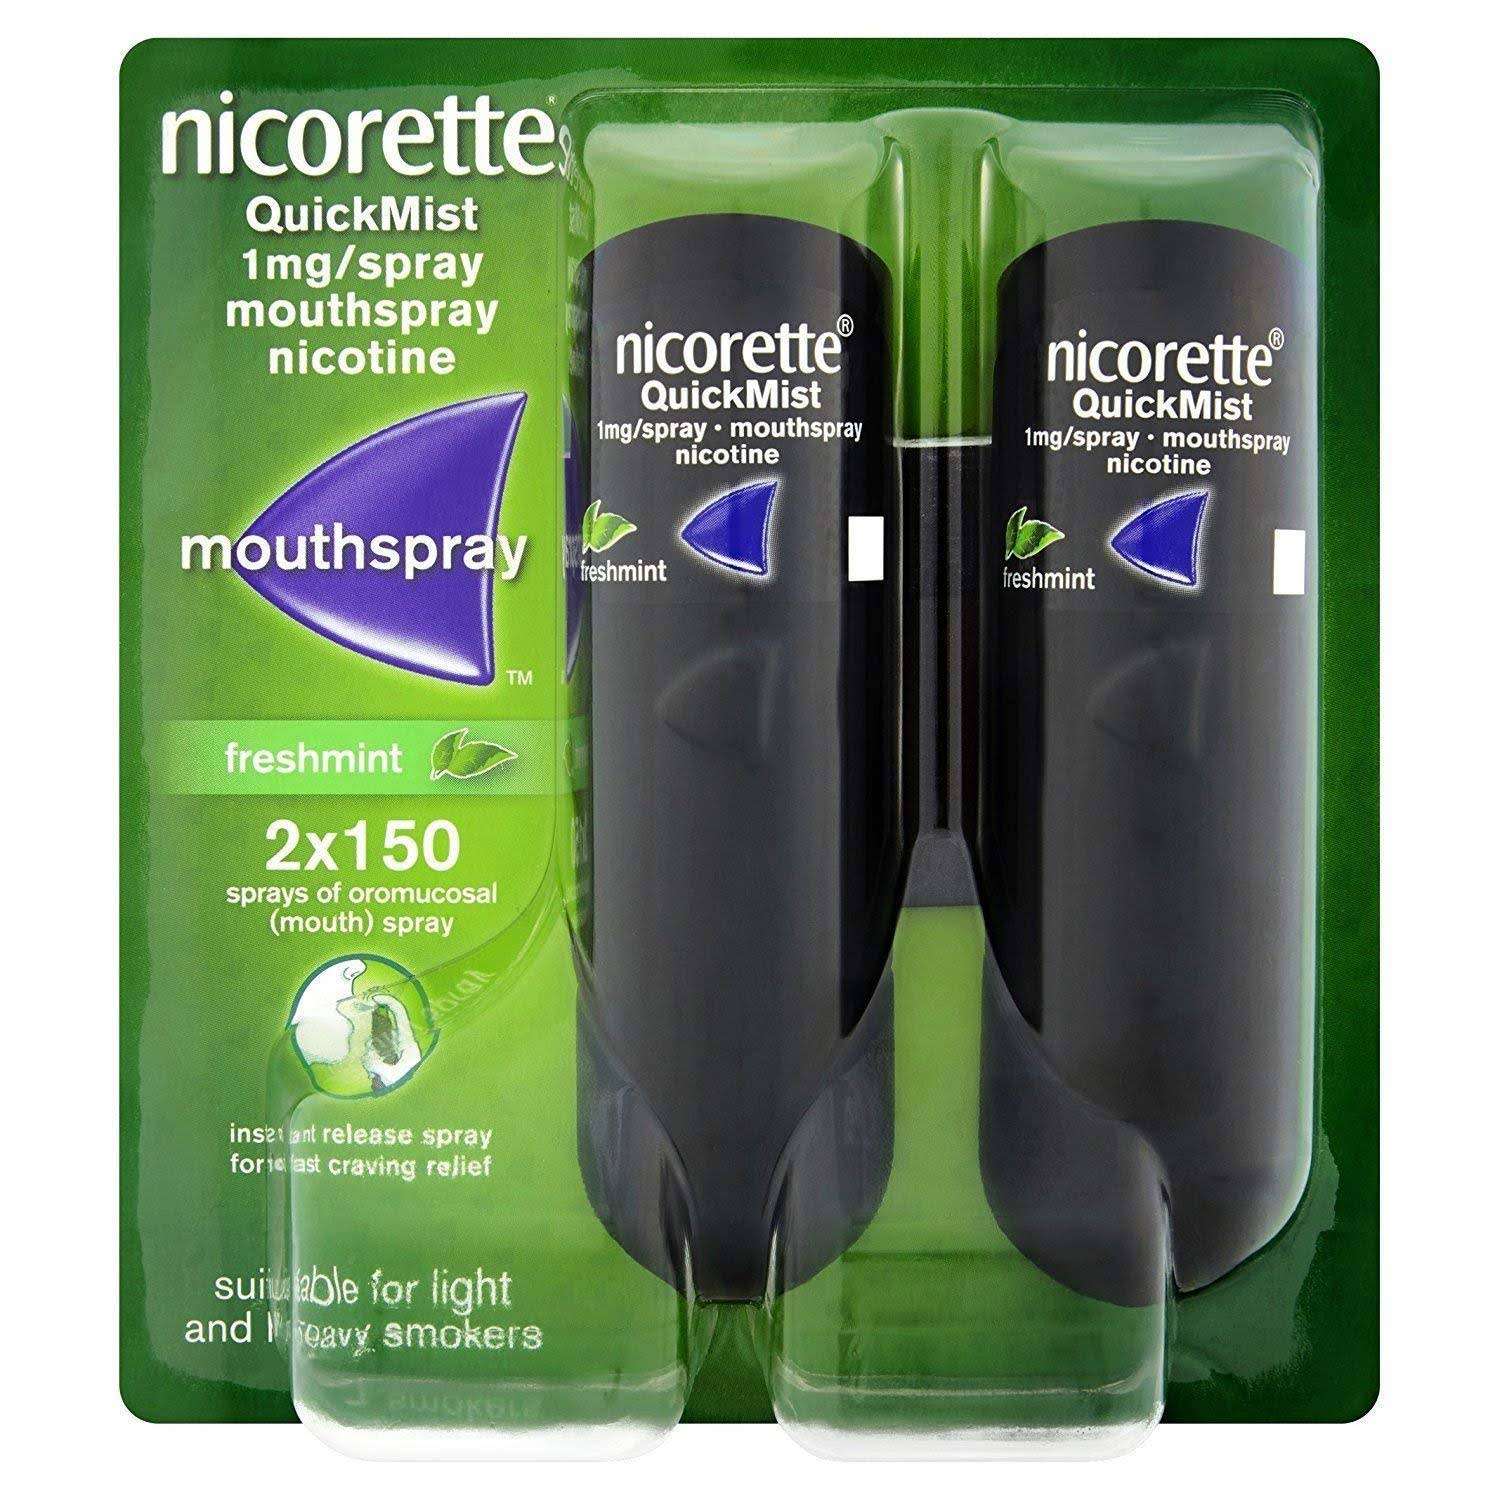 Nicorette QuickMist Mouthspray Freshmint - 2 x 150 Sprays